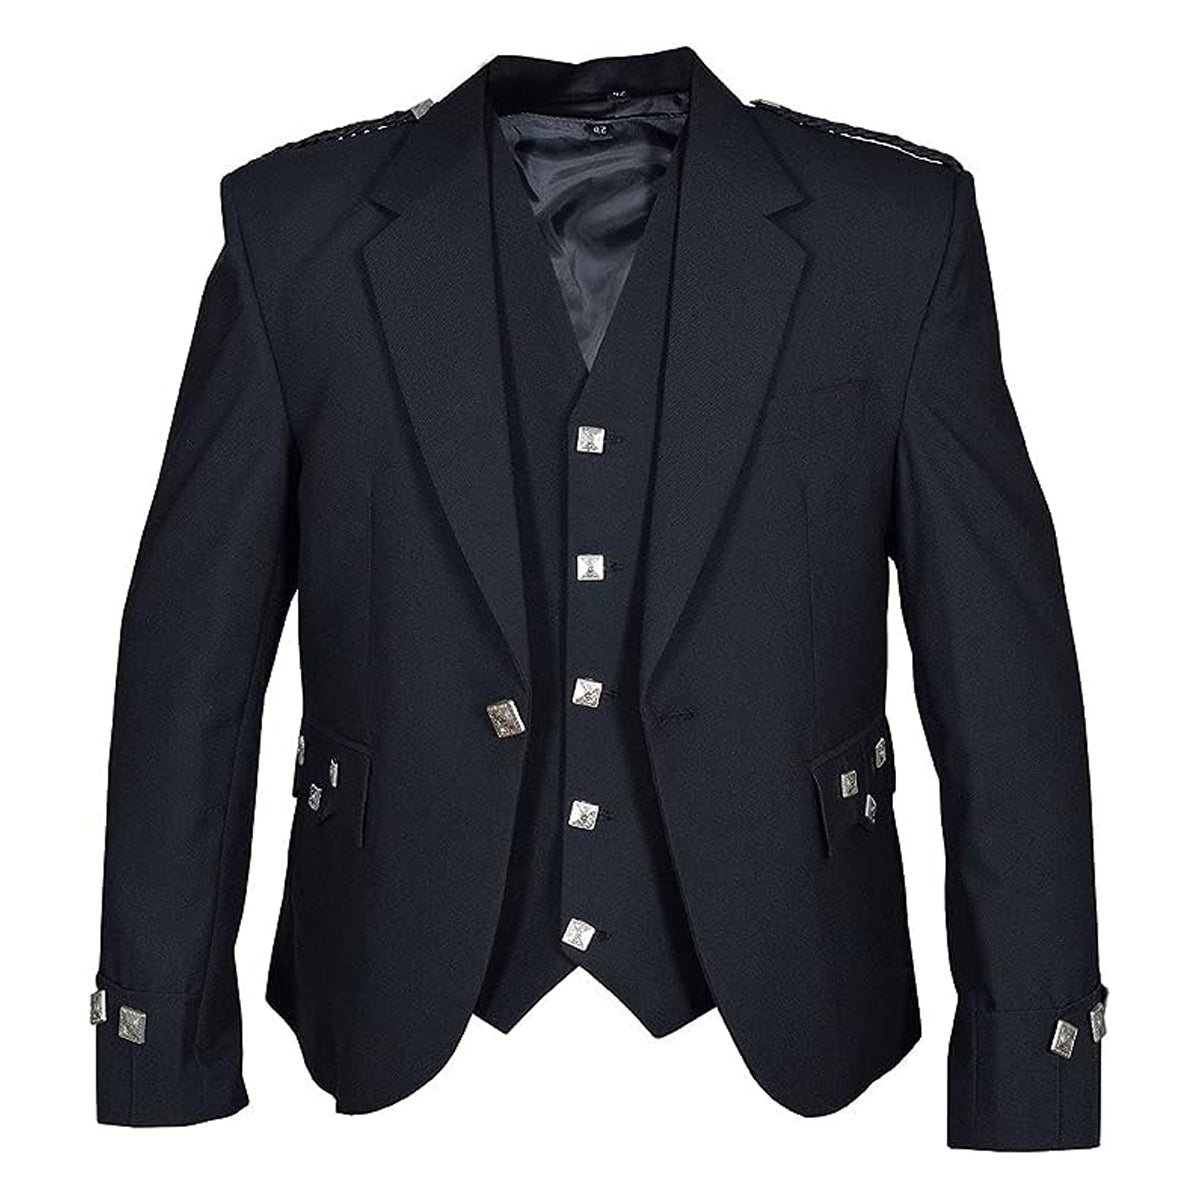 TRUESAGA - Scottish Black Argyll Kilt Jacket Finest Quality Barathea Wool Fabric With 5 Button Vest